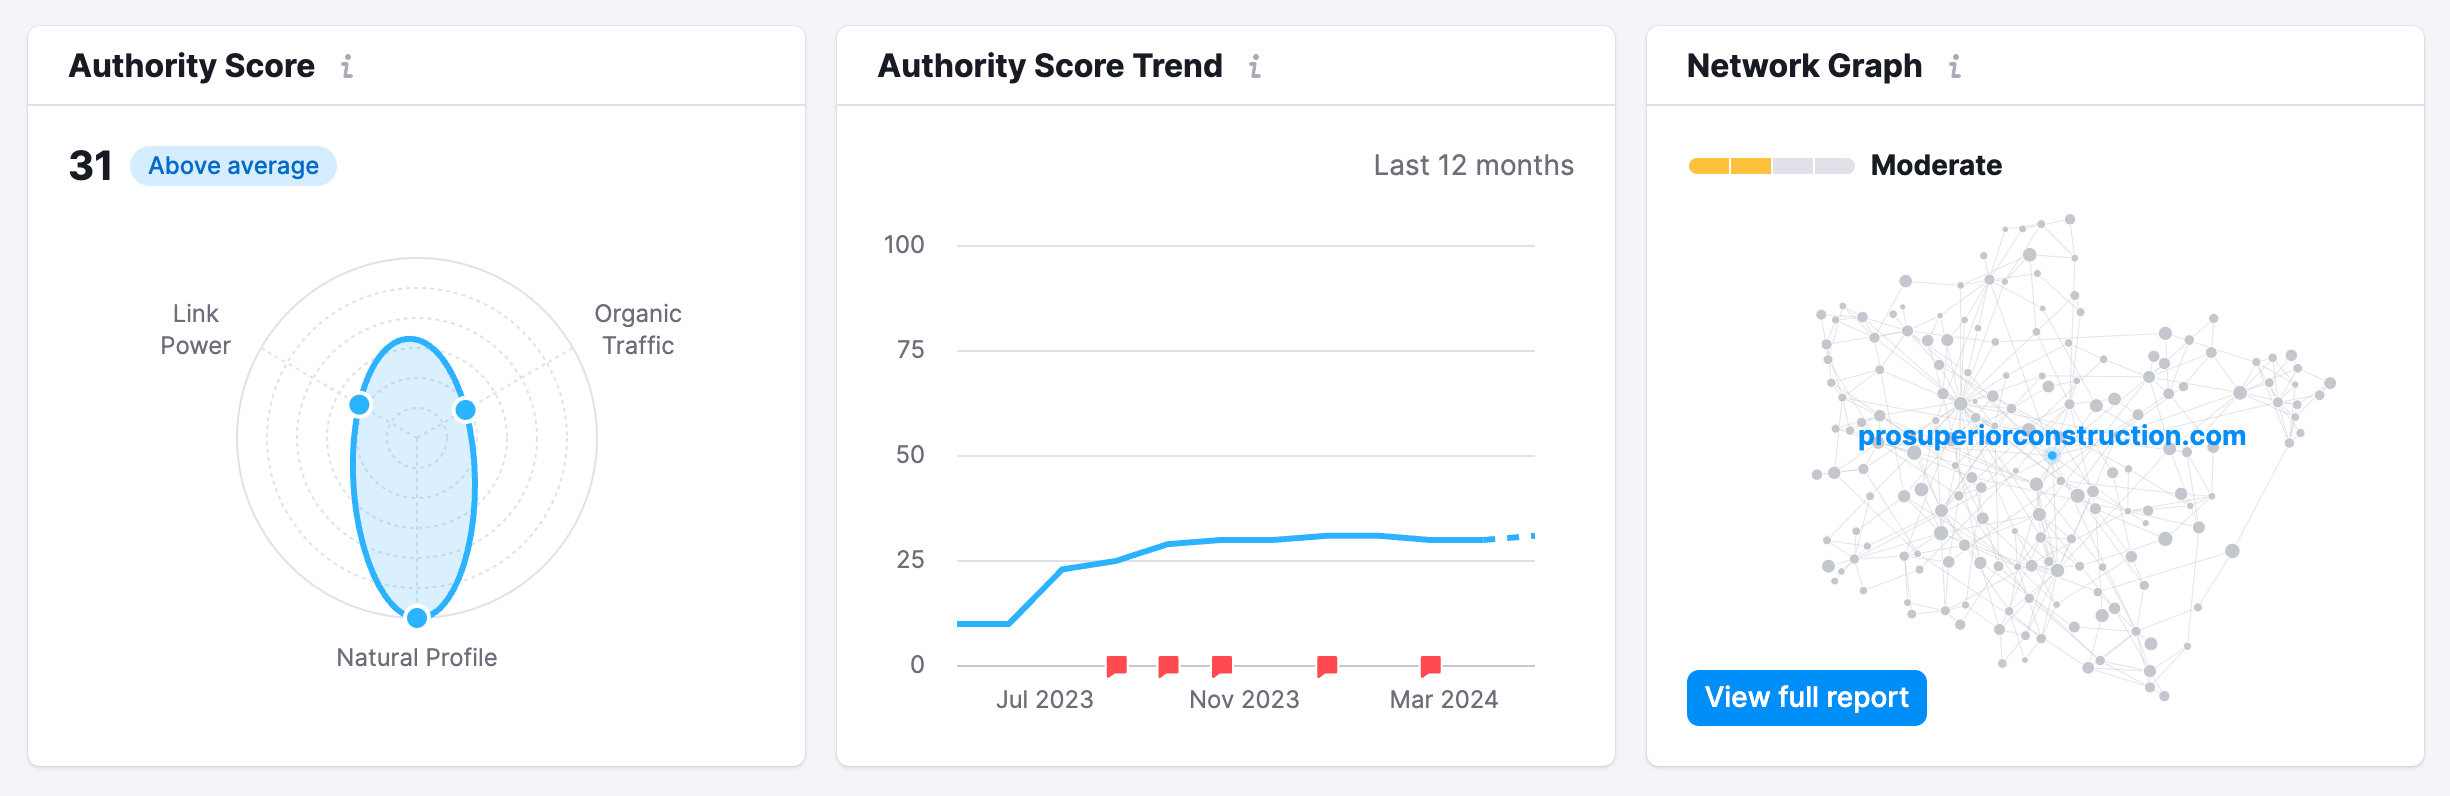 Semrush authority score, authority score trend and network graph.